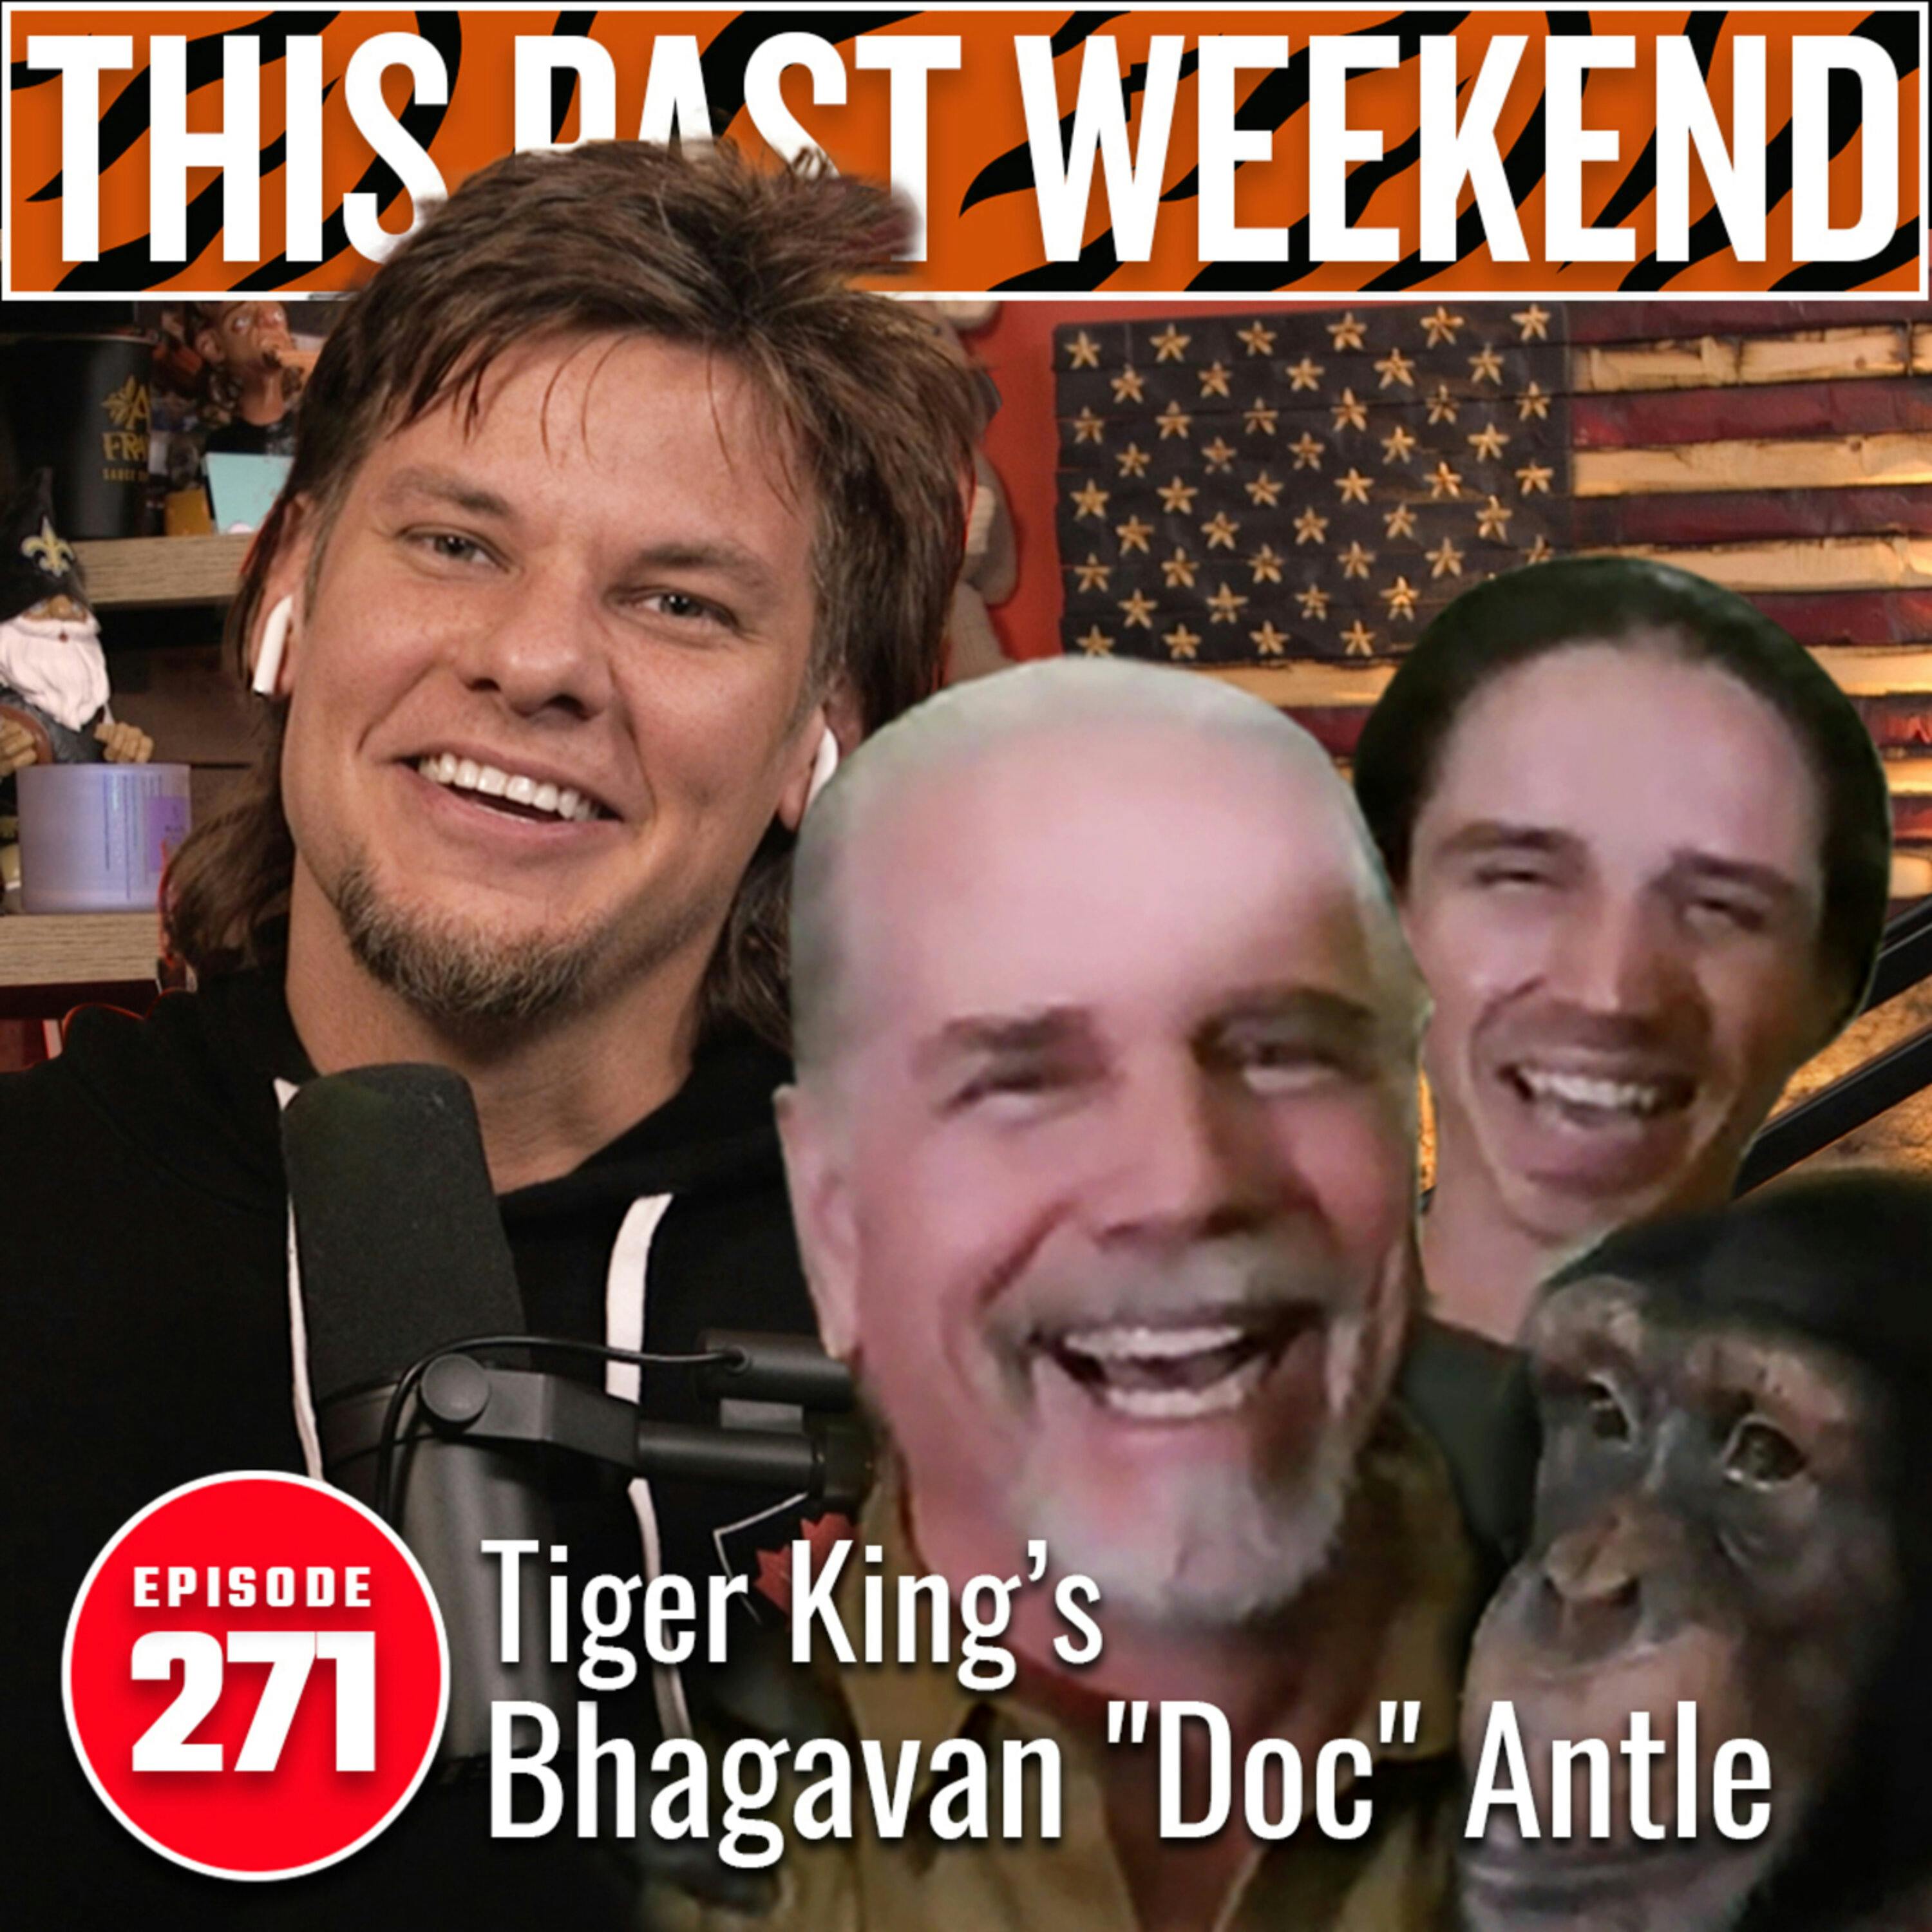 Tiger King's Bhagavan "Doc" Antle | This Past Weekend w/ 271